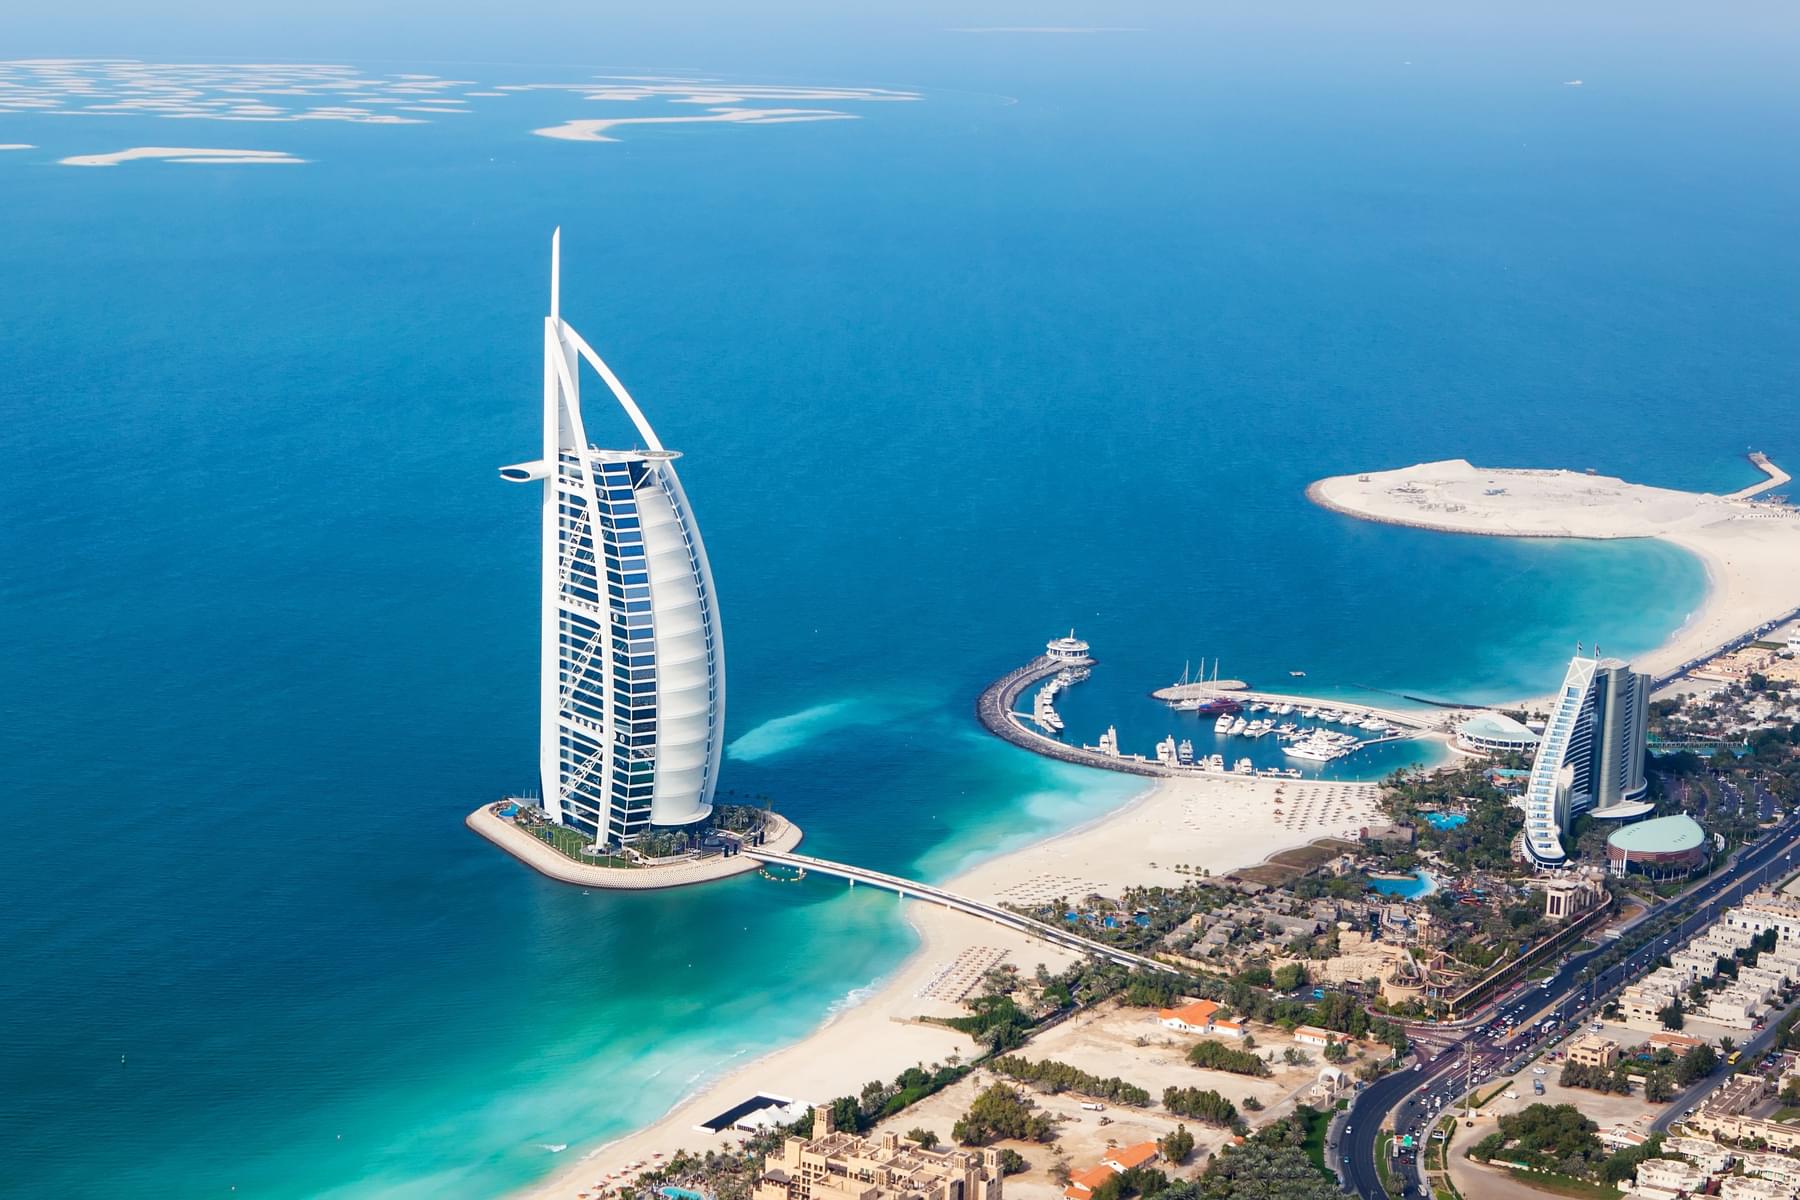 Admire Dubai’s 7-Star Hotel Burj Al Arab